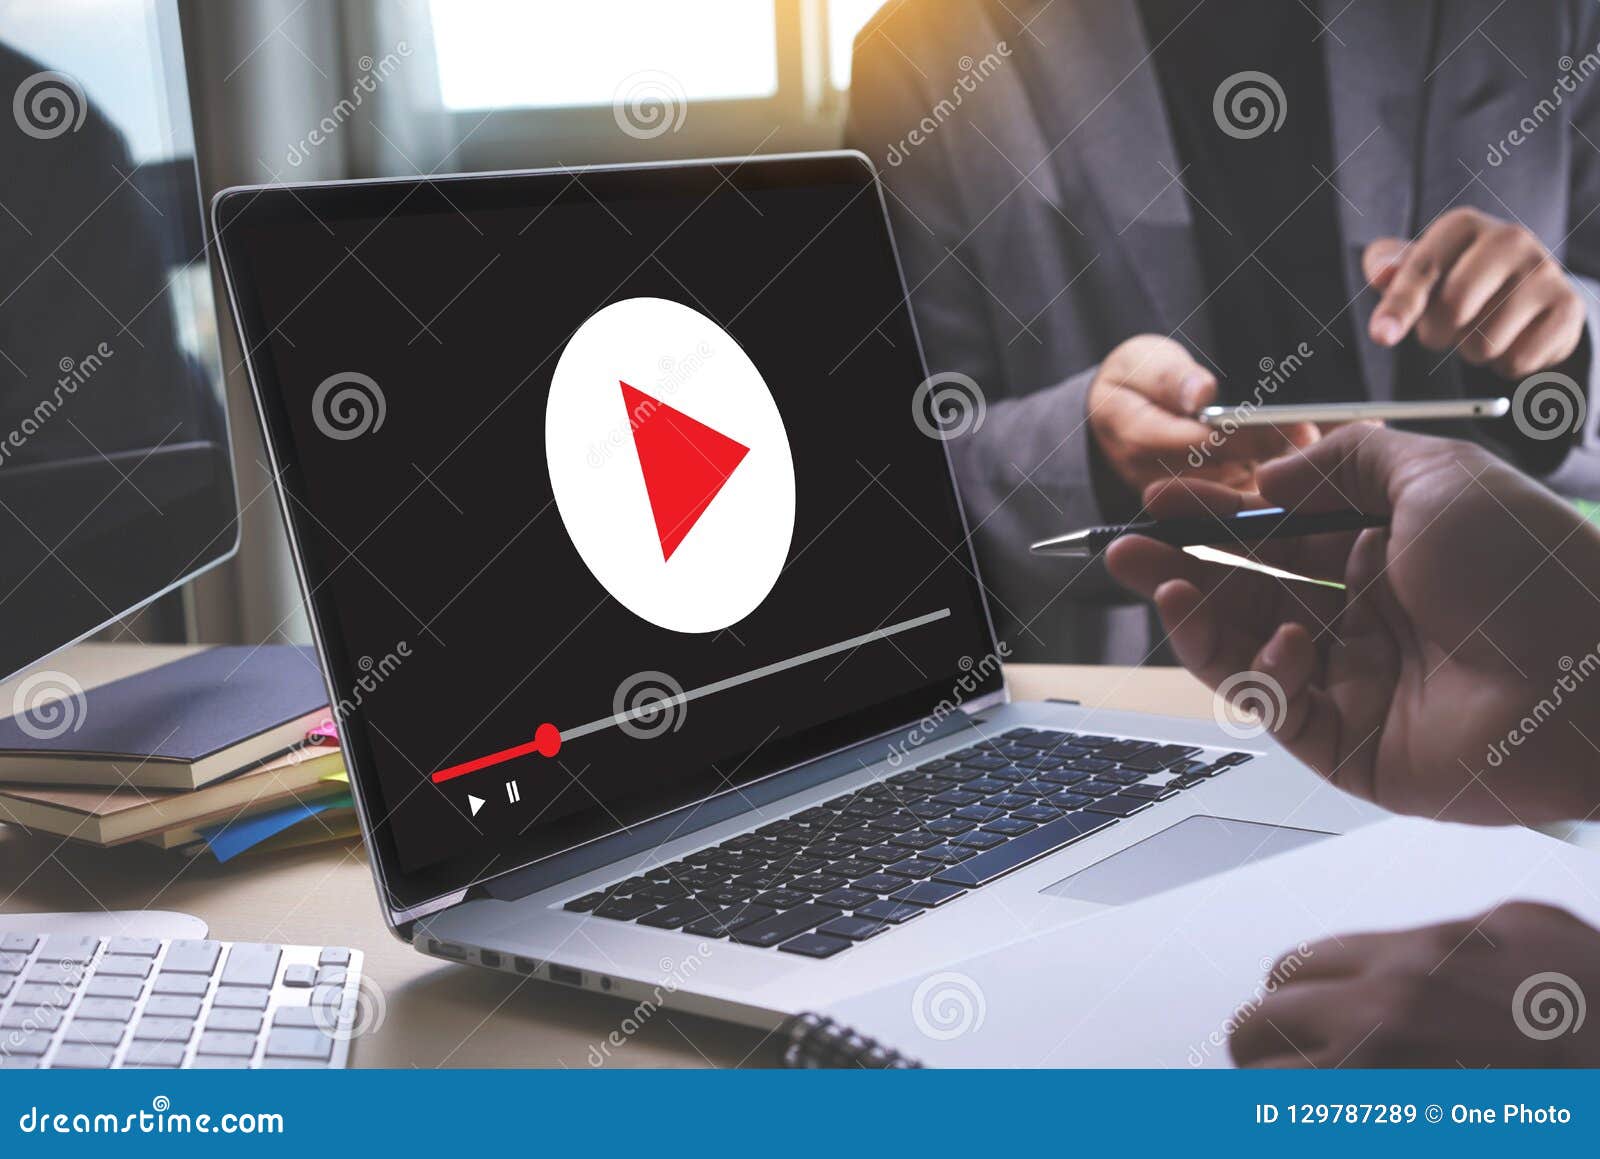 video marketing audio video , market interactive channels , bu